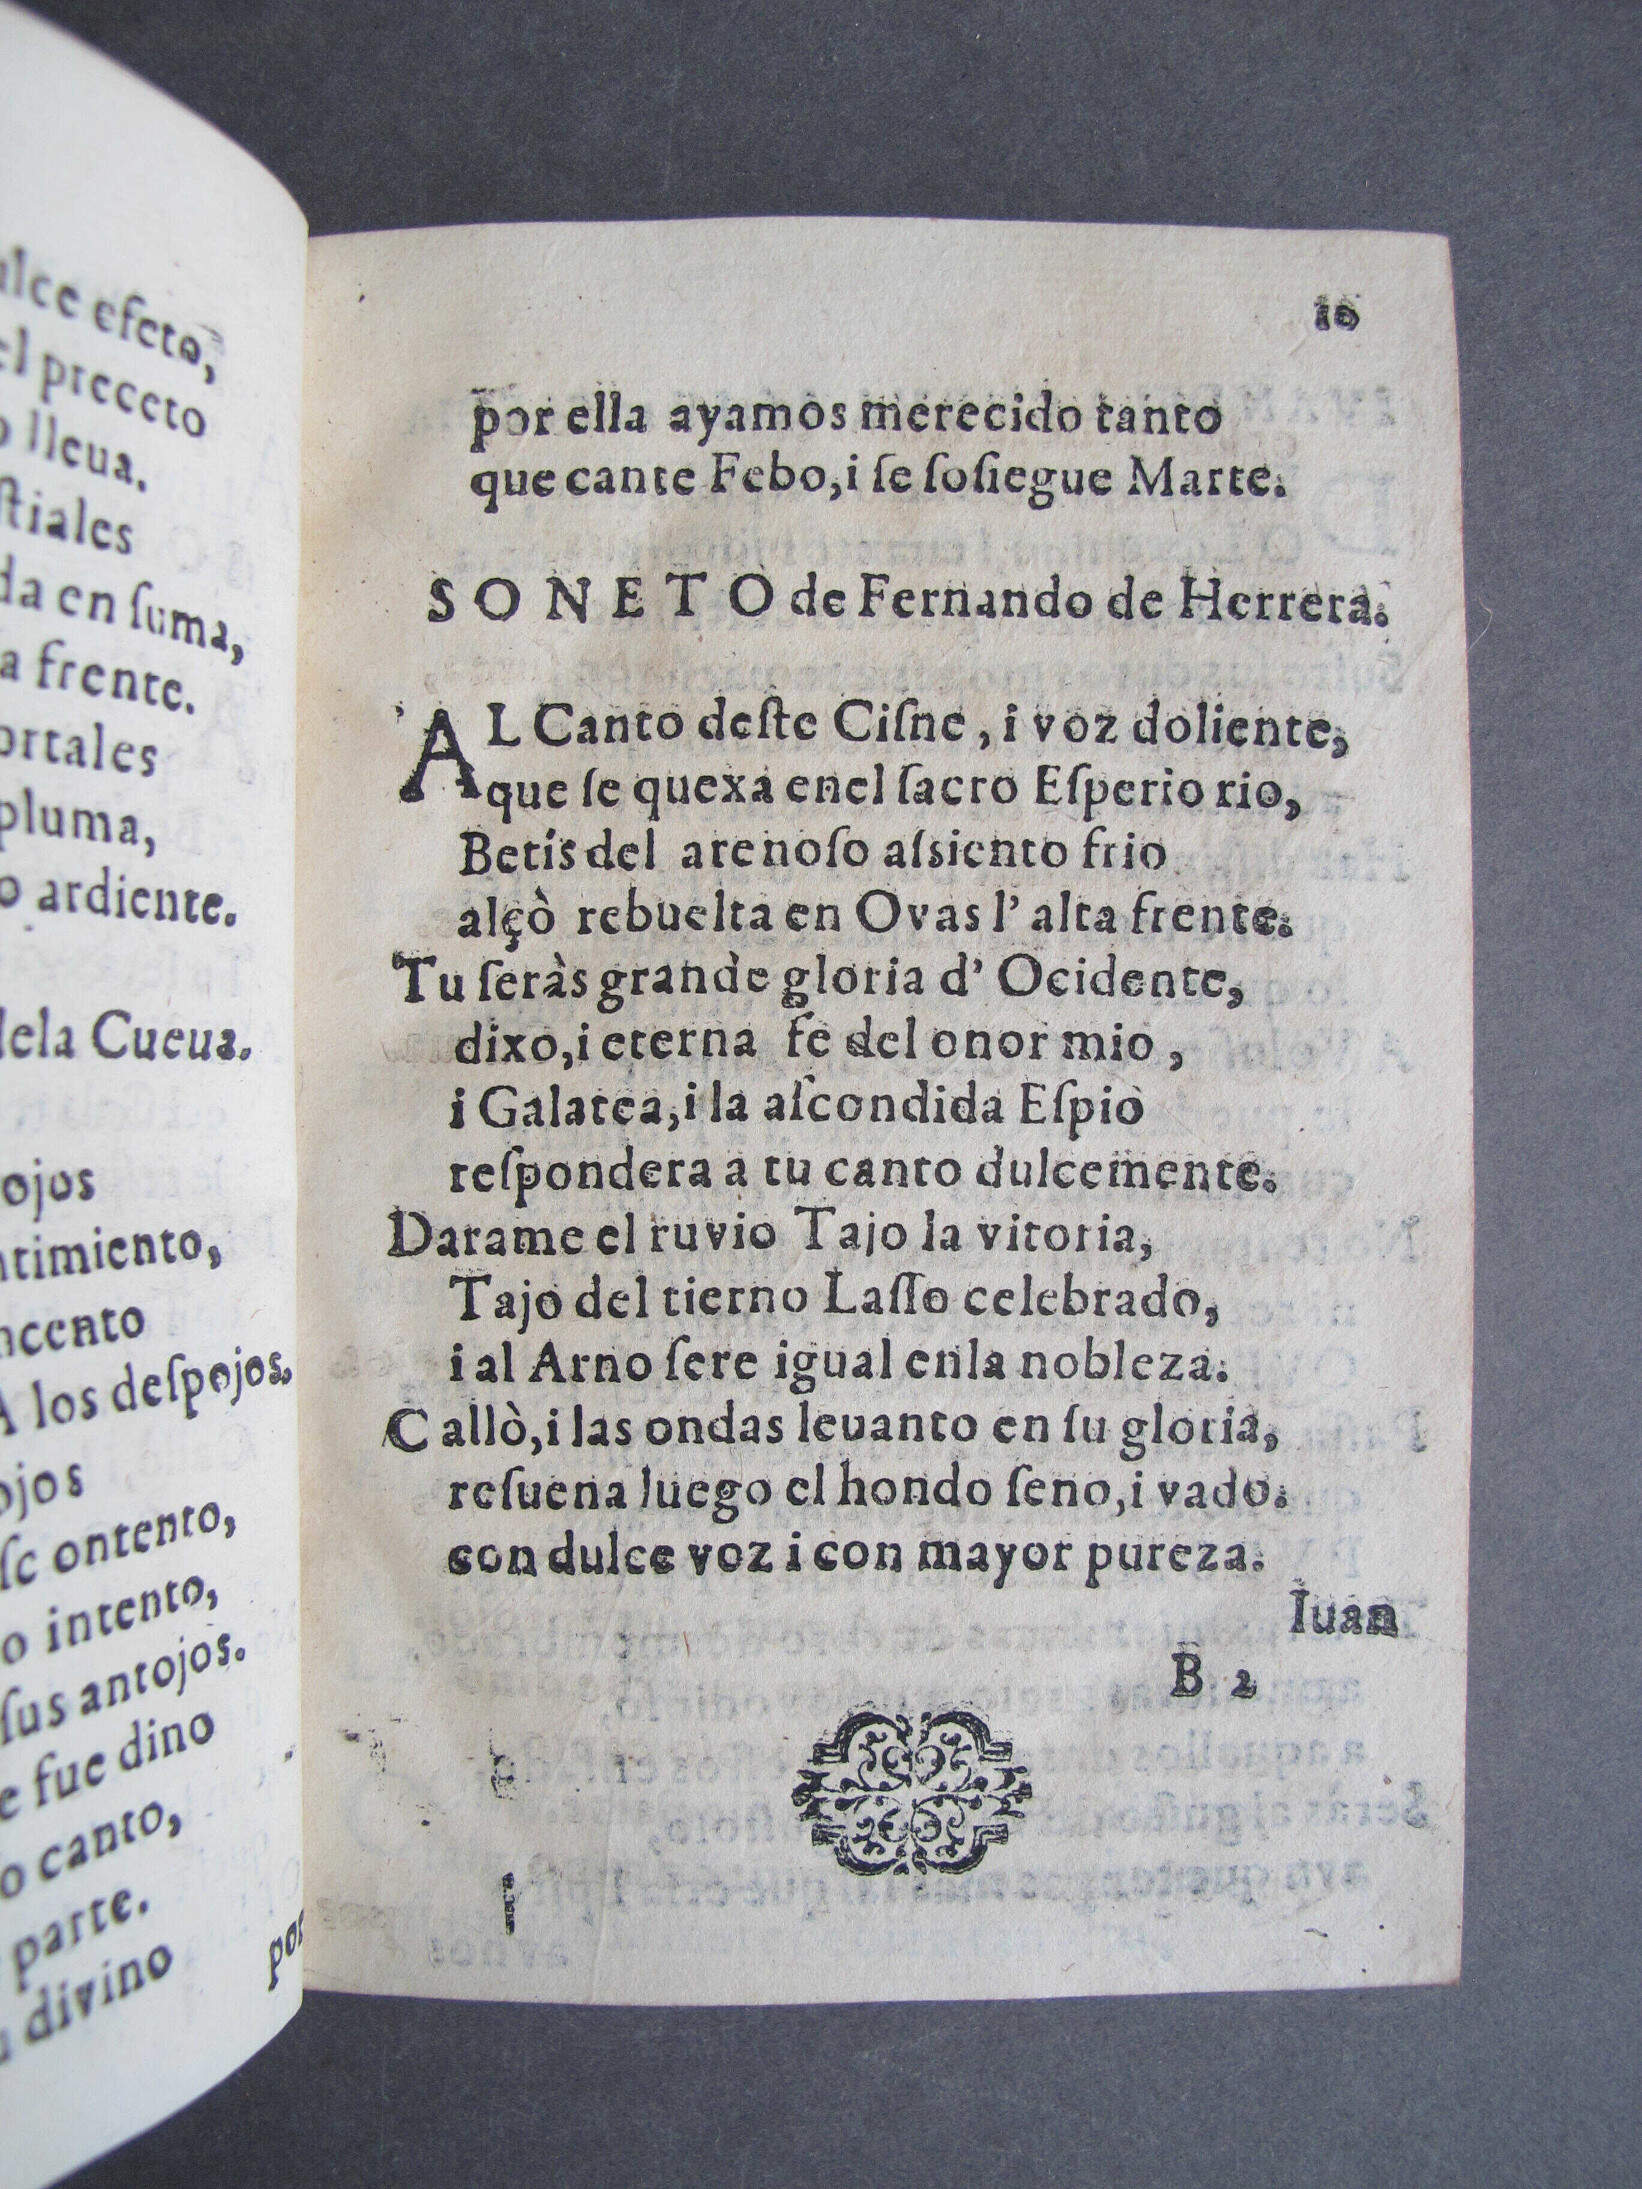 Folio B2